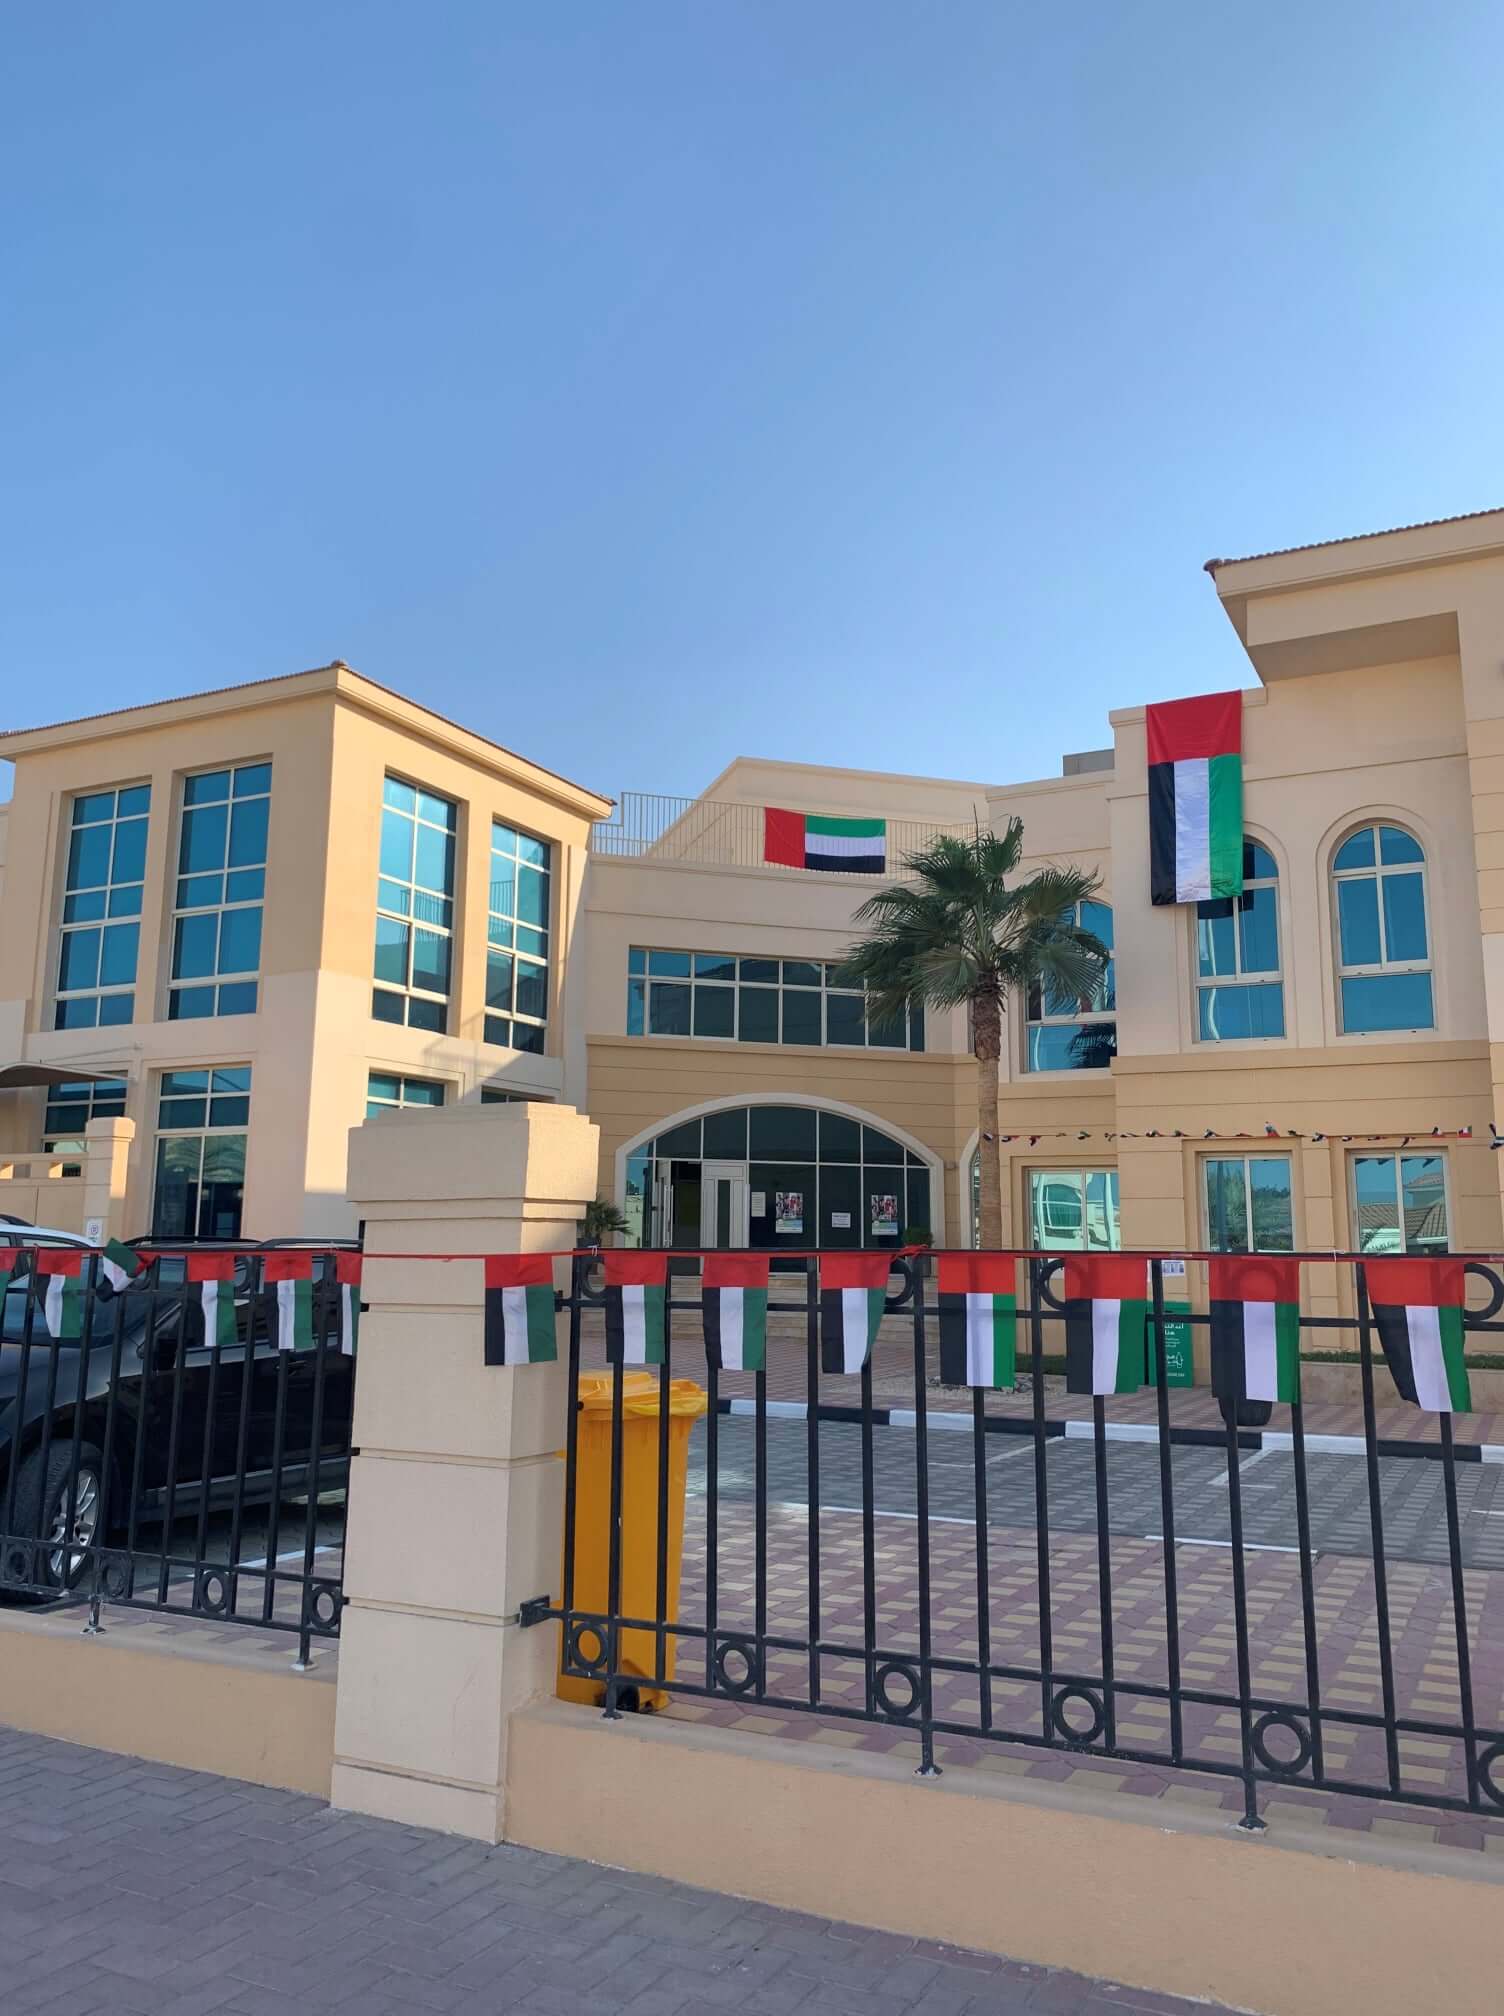 GEMS Royal Dubai School